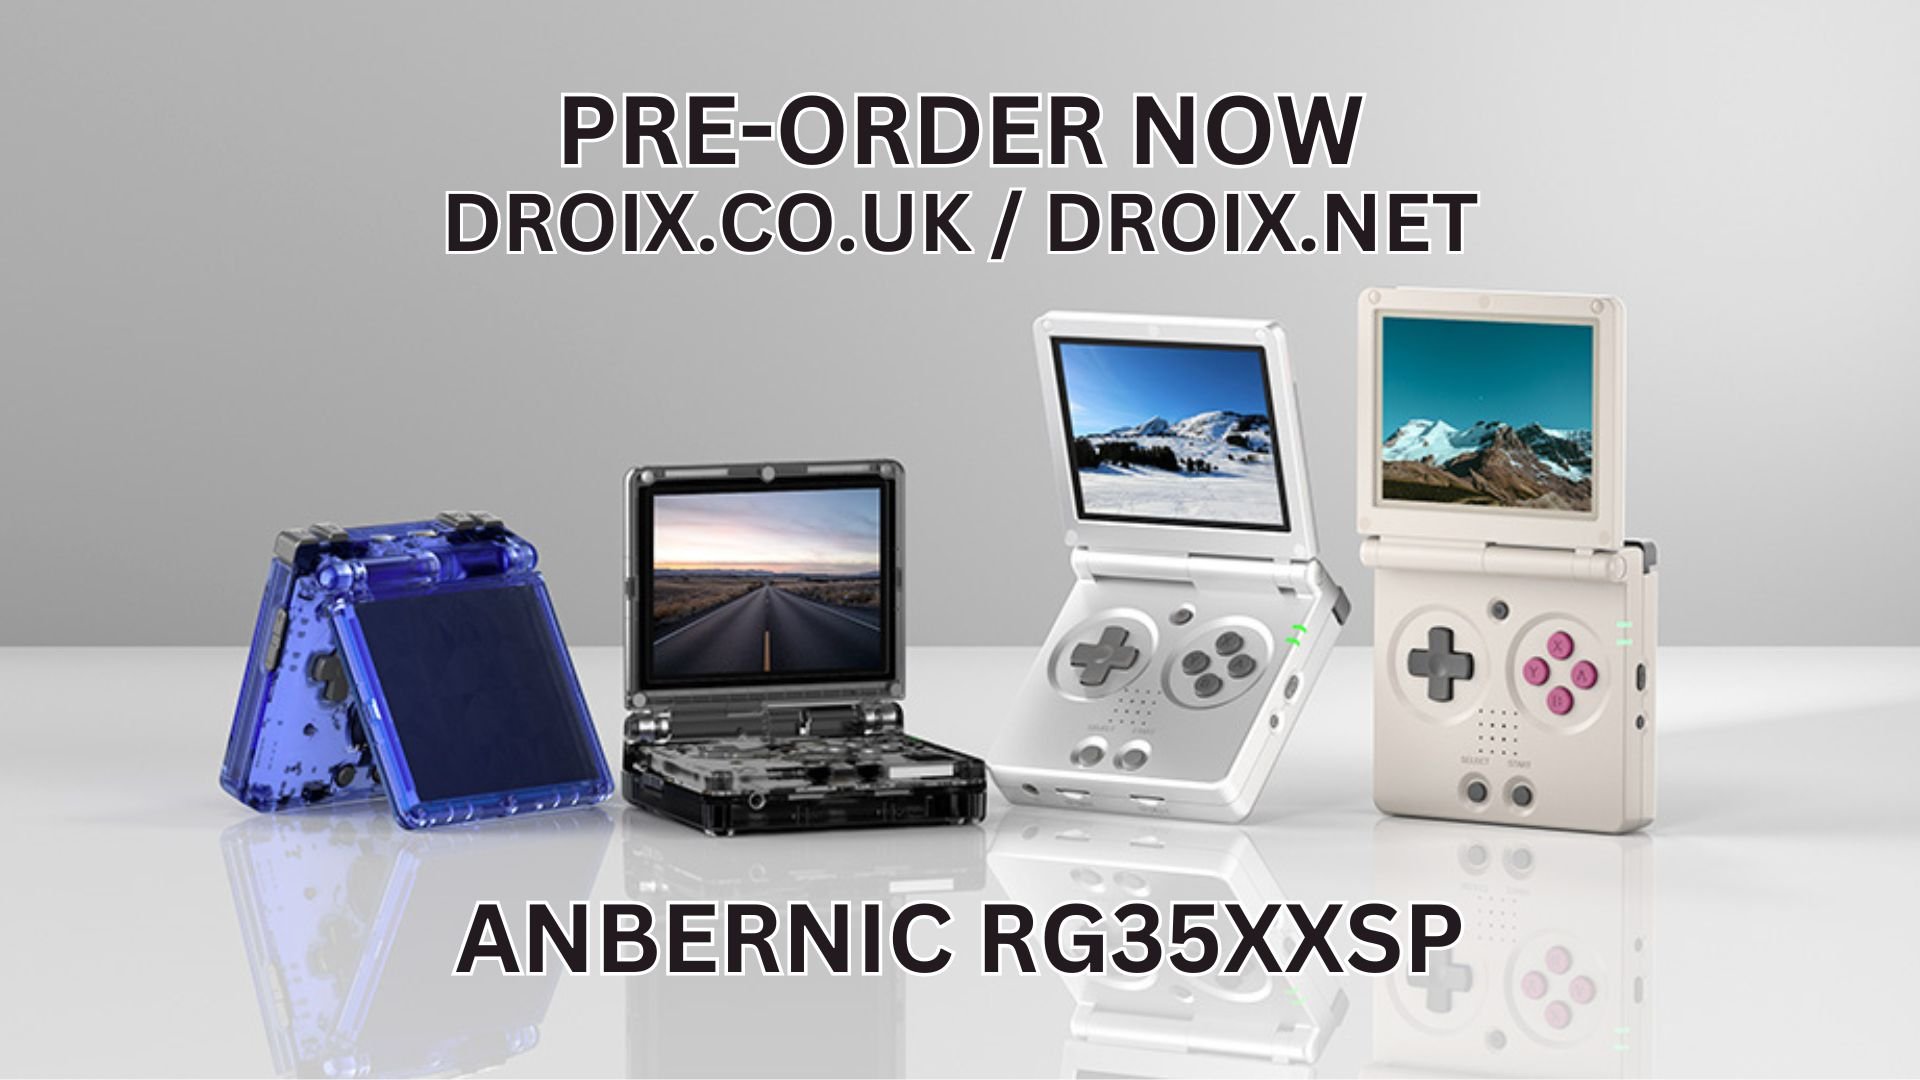 Pre-Order the Anbernic RG35XXSP Retro Gaming Handheld Now